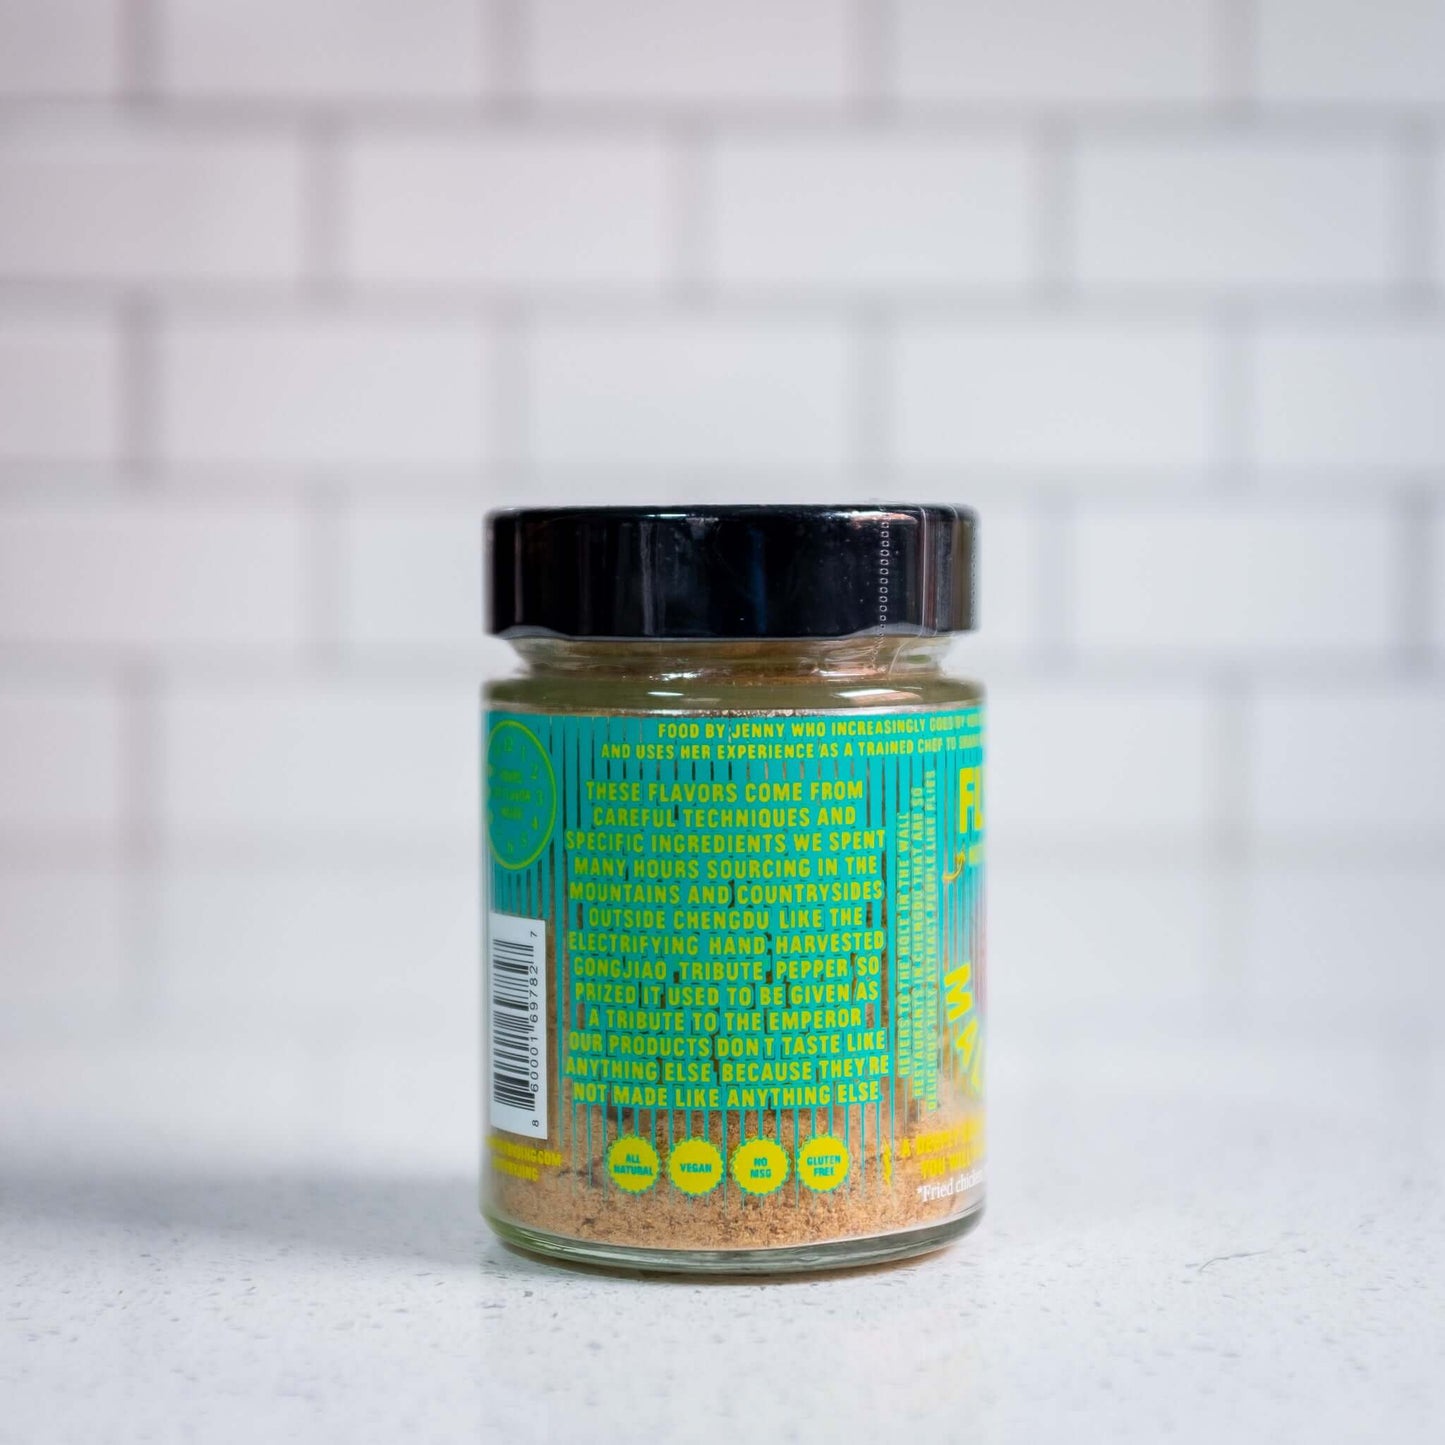 Mala spice mix jar details